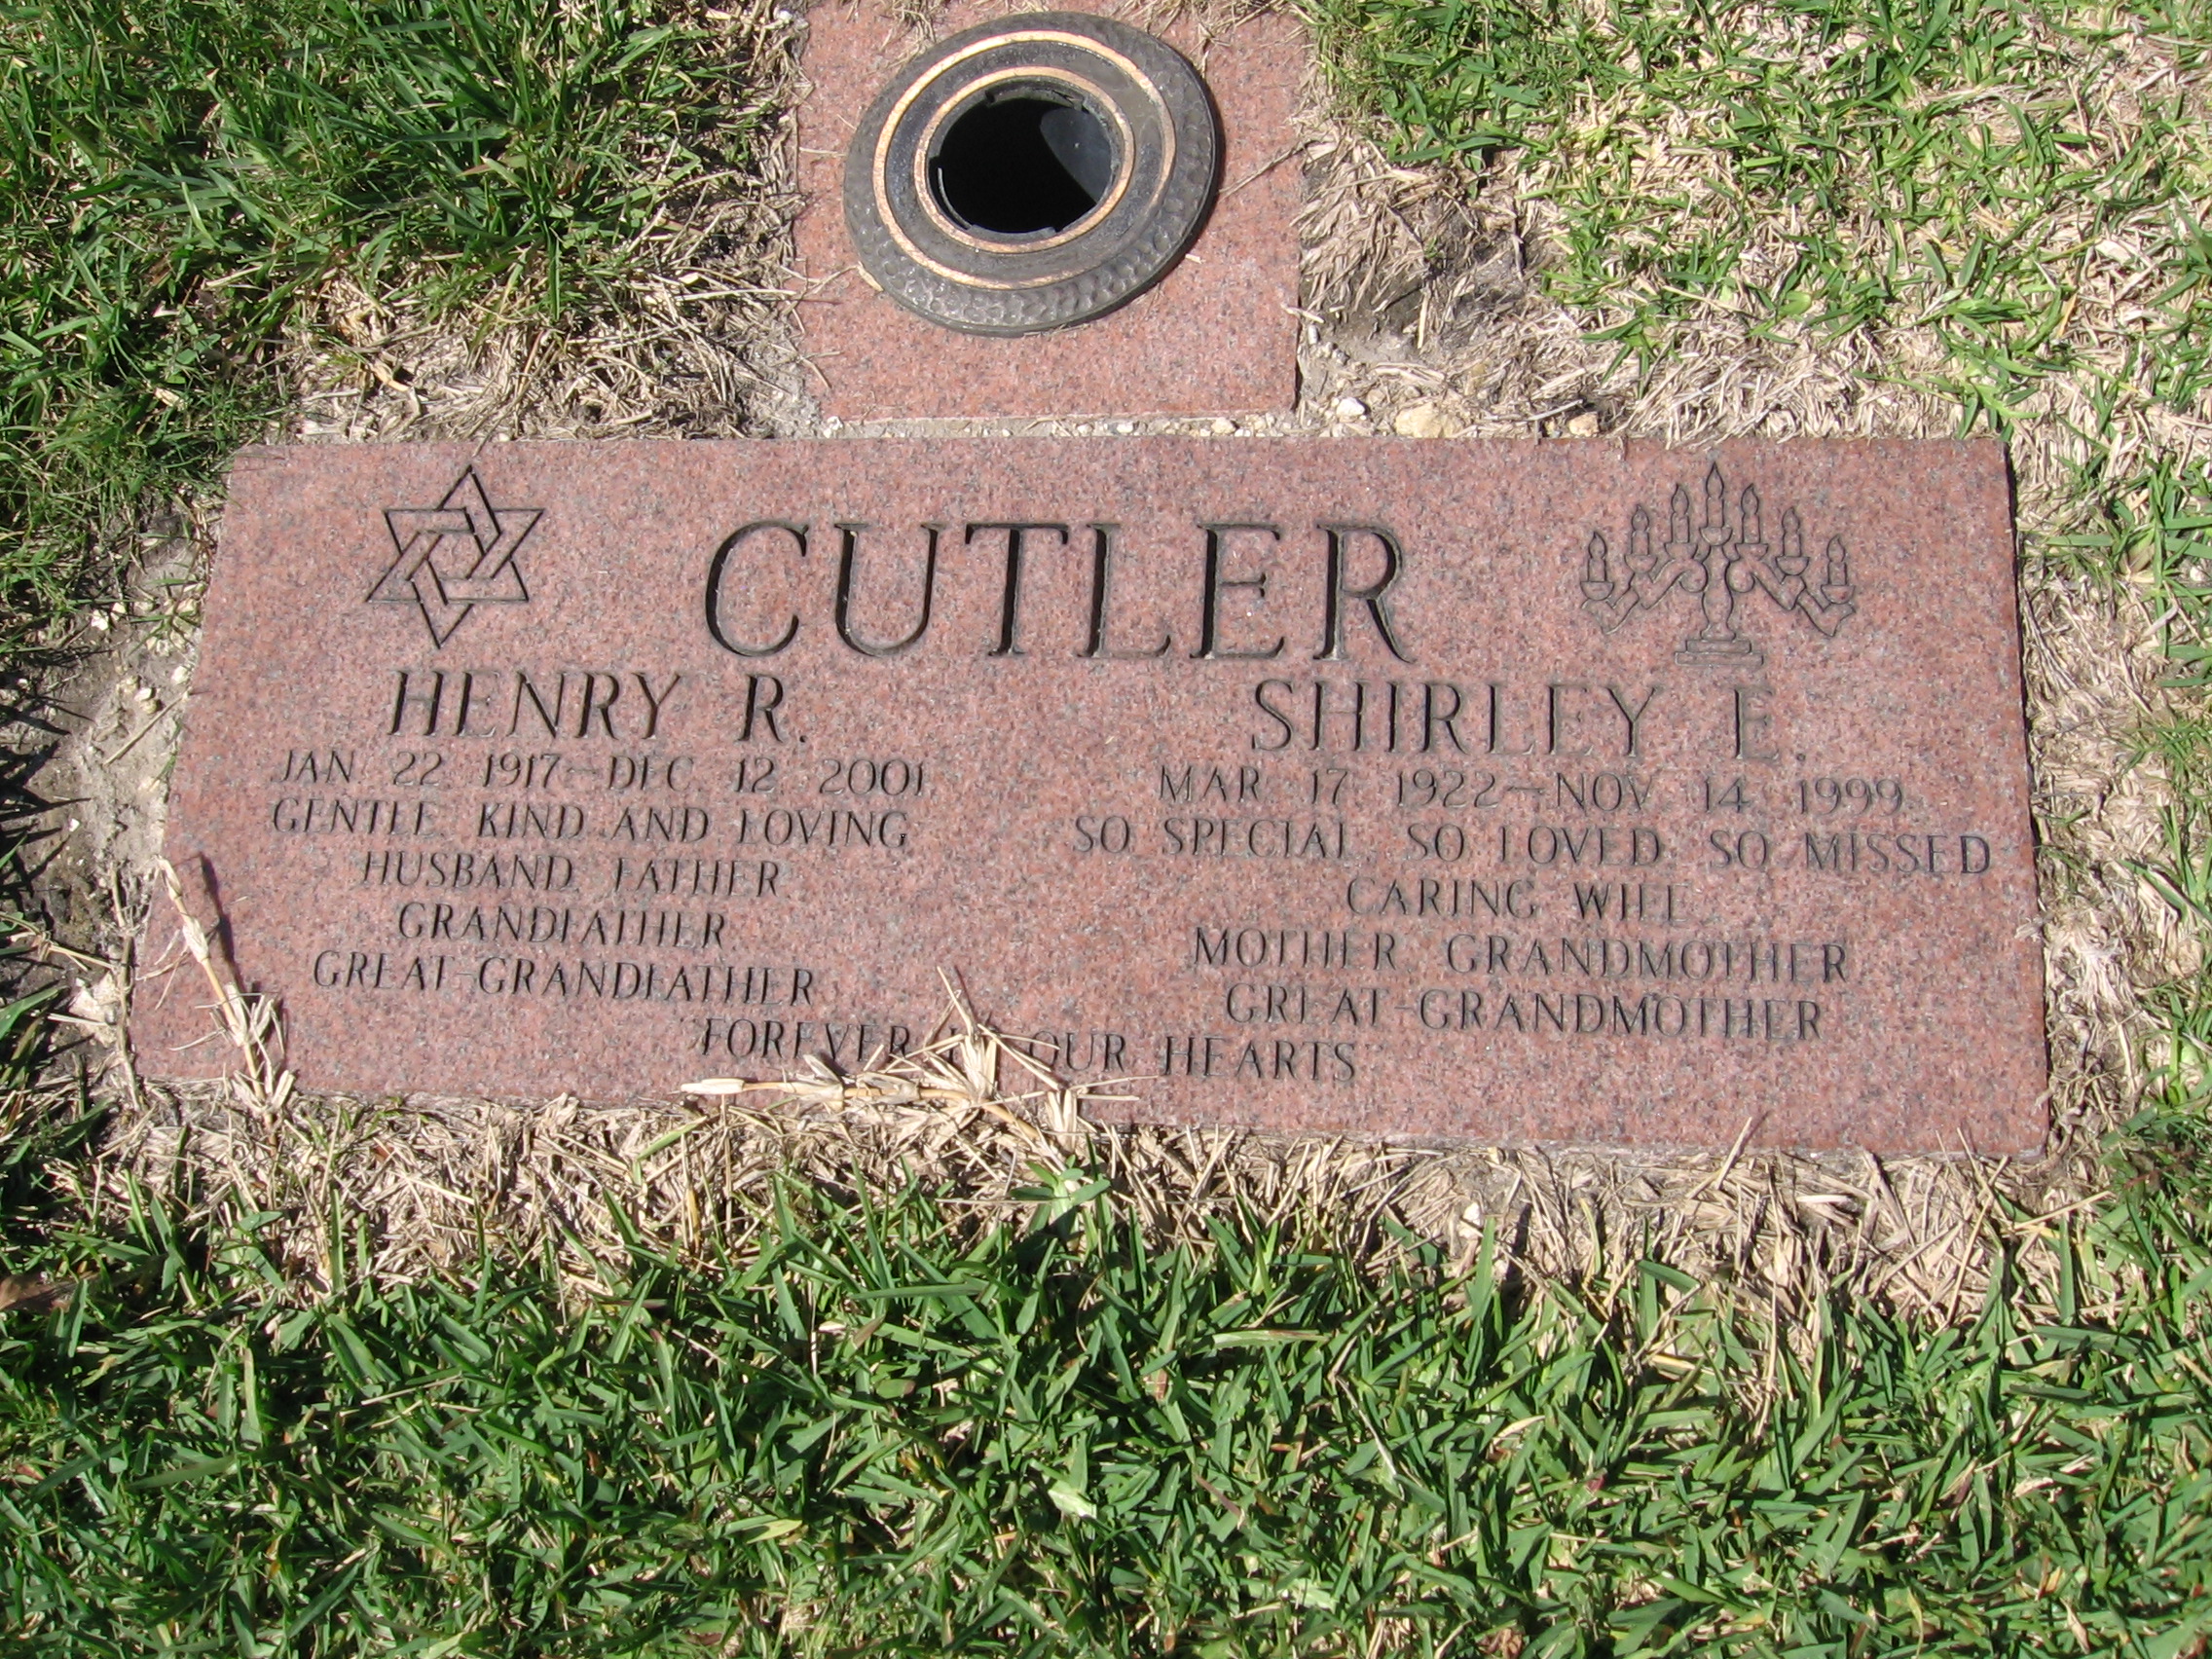 Henry R Cutler